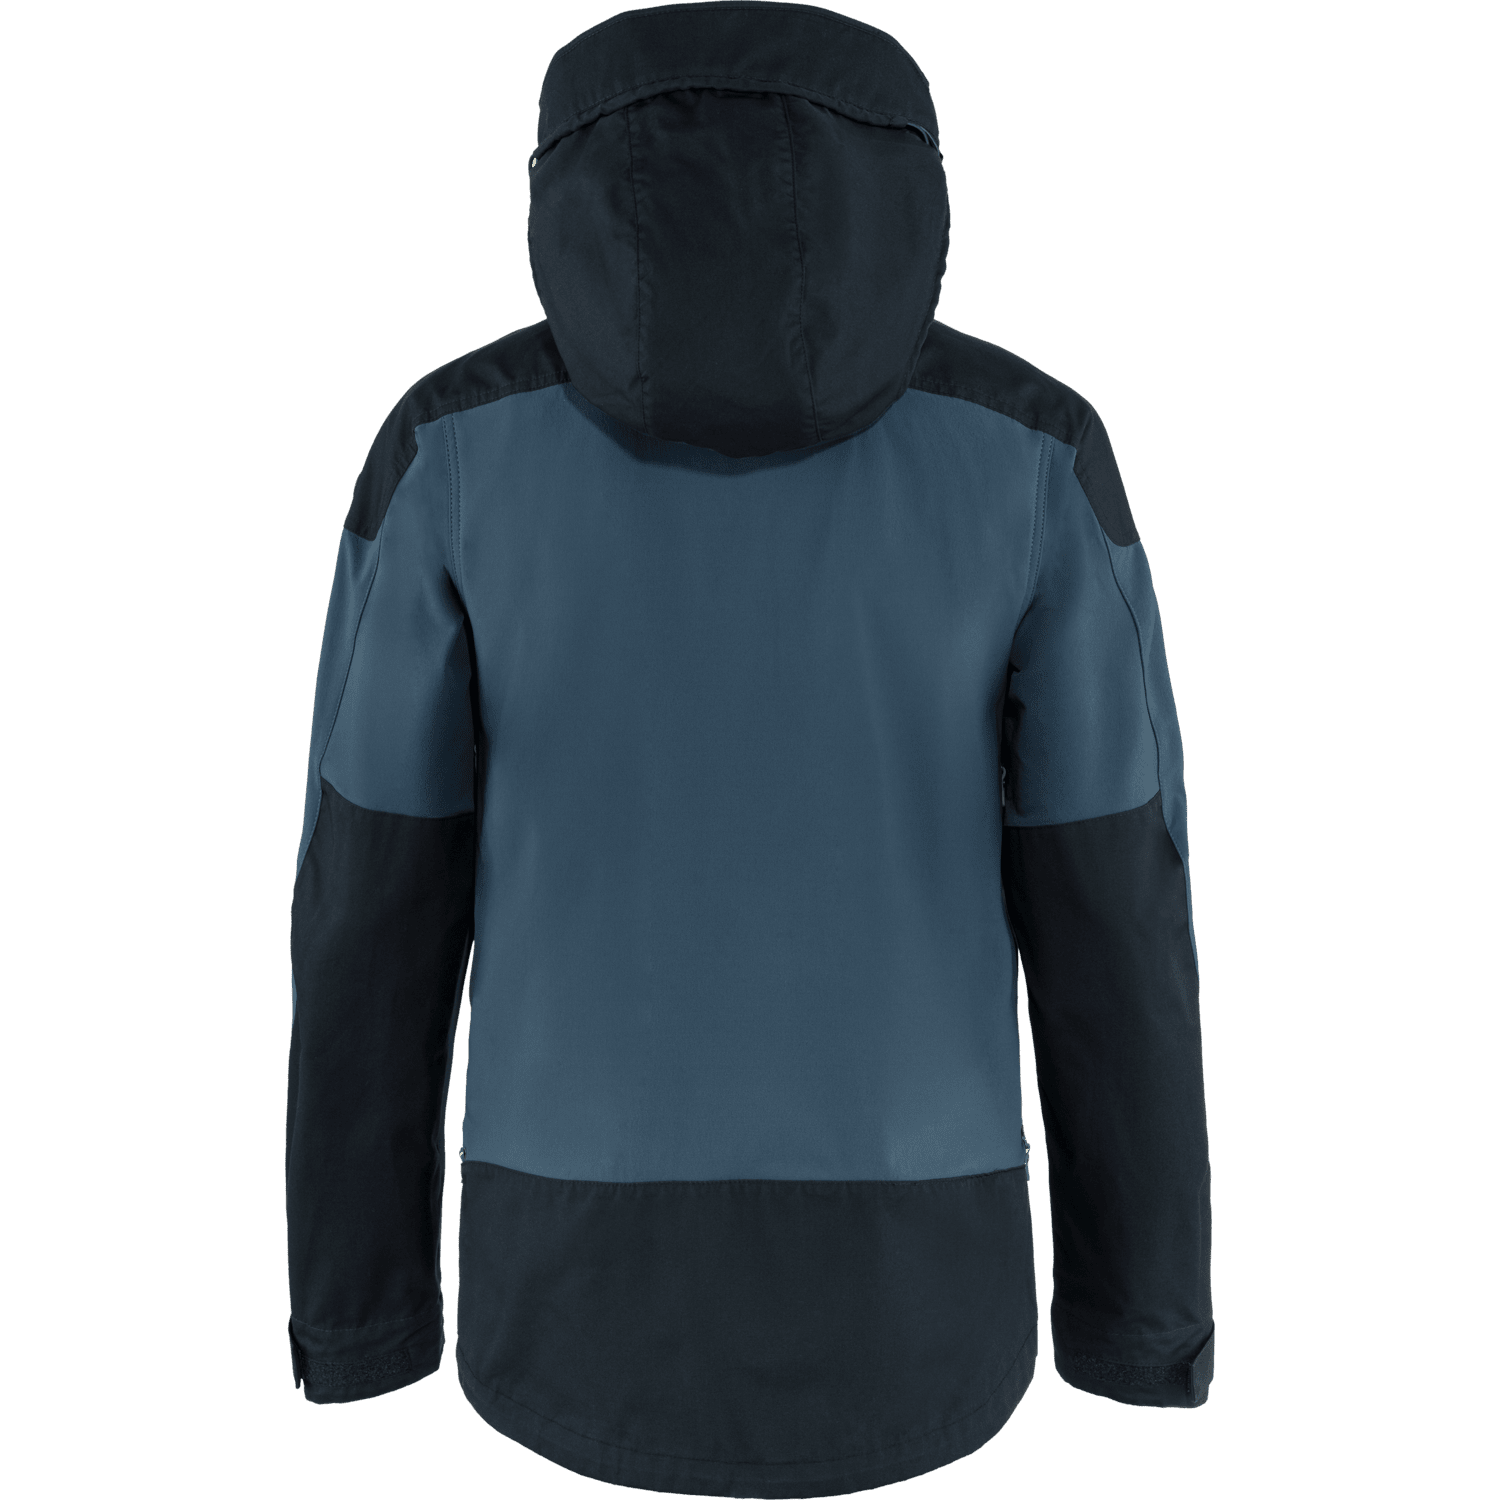 Fjällräven M's Keb Jacket - G-1000® - Recycled Polyester & Organic Cotton Dark Navy-Uncle Blue Jacket